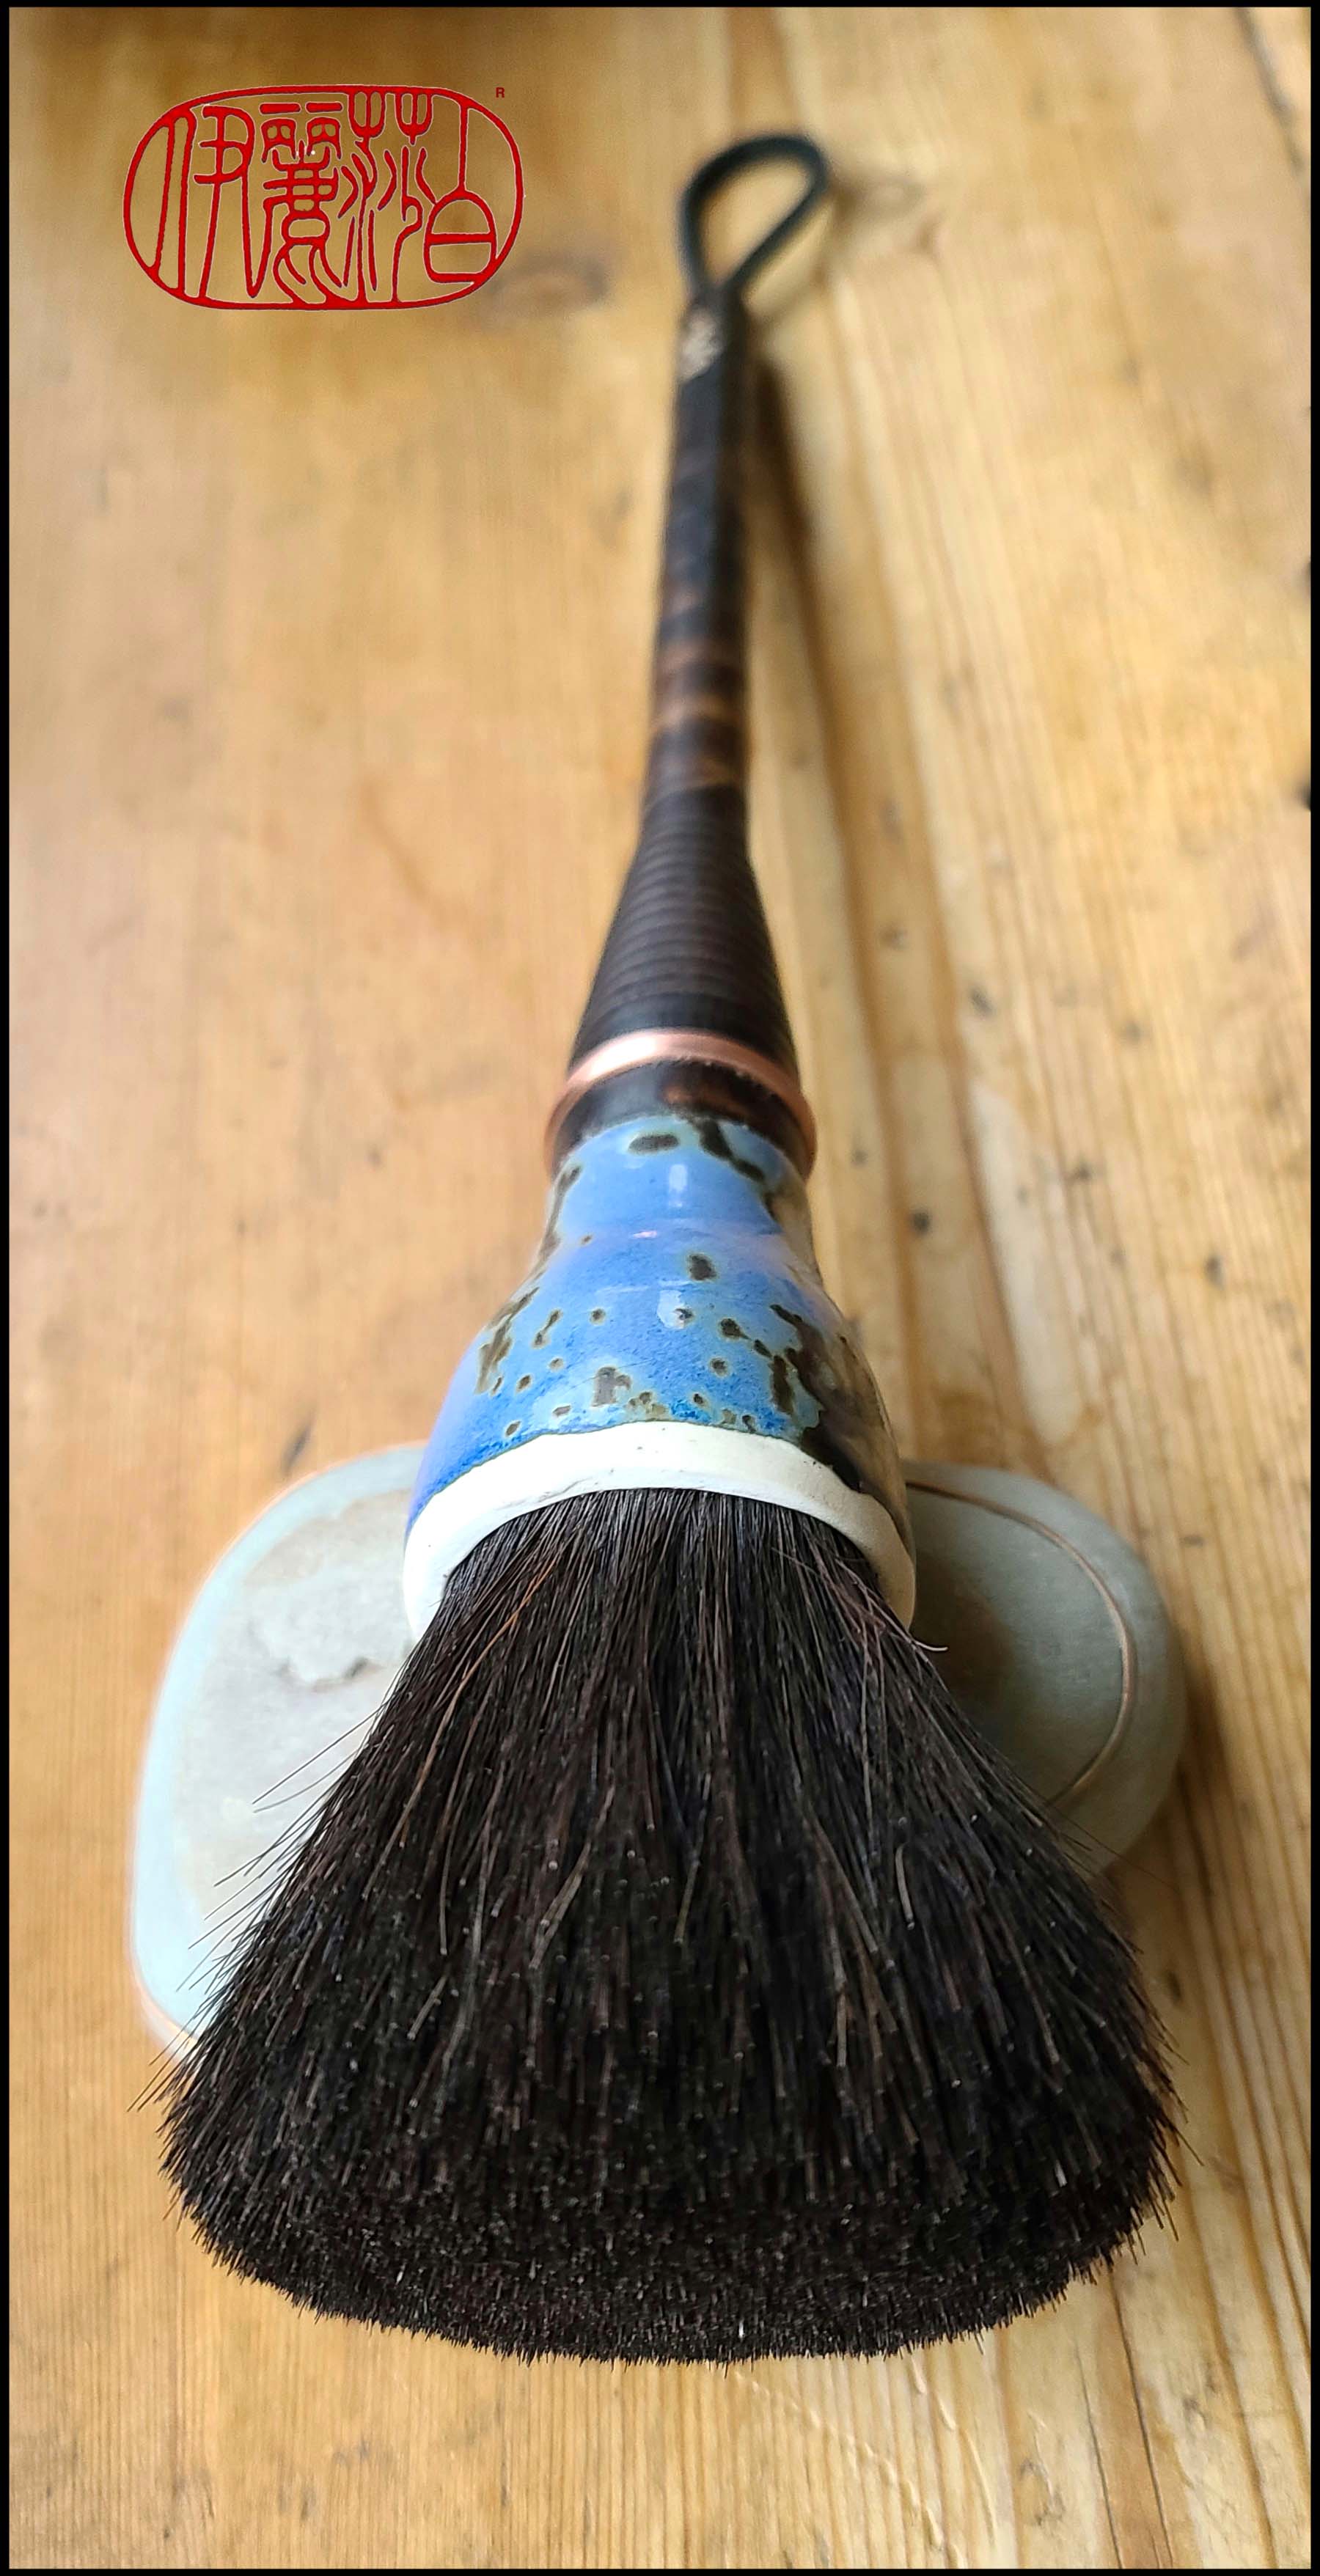 Black Horsehair Paint Brush with Wood Bobbin Handle Art Supplies Elizabeth Schowachert Art